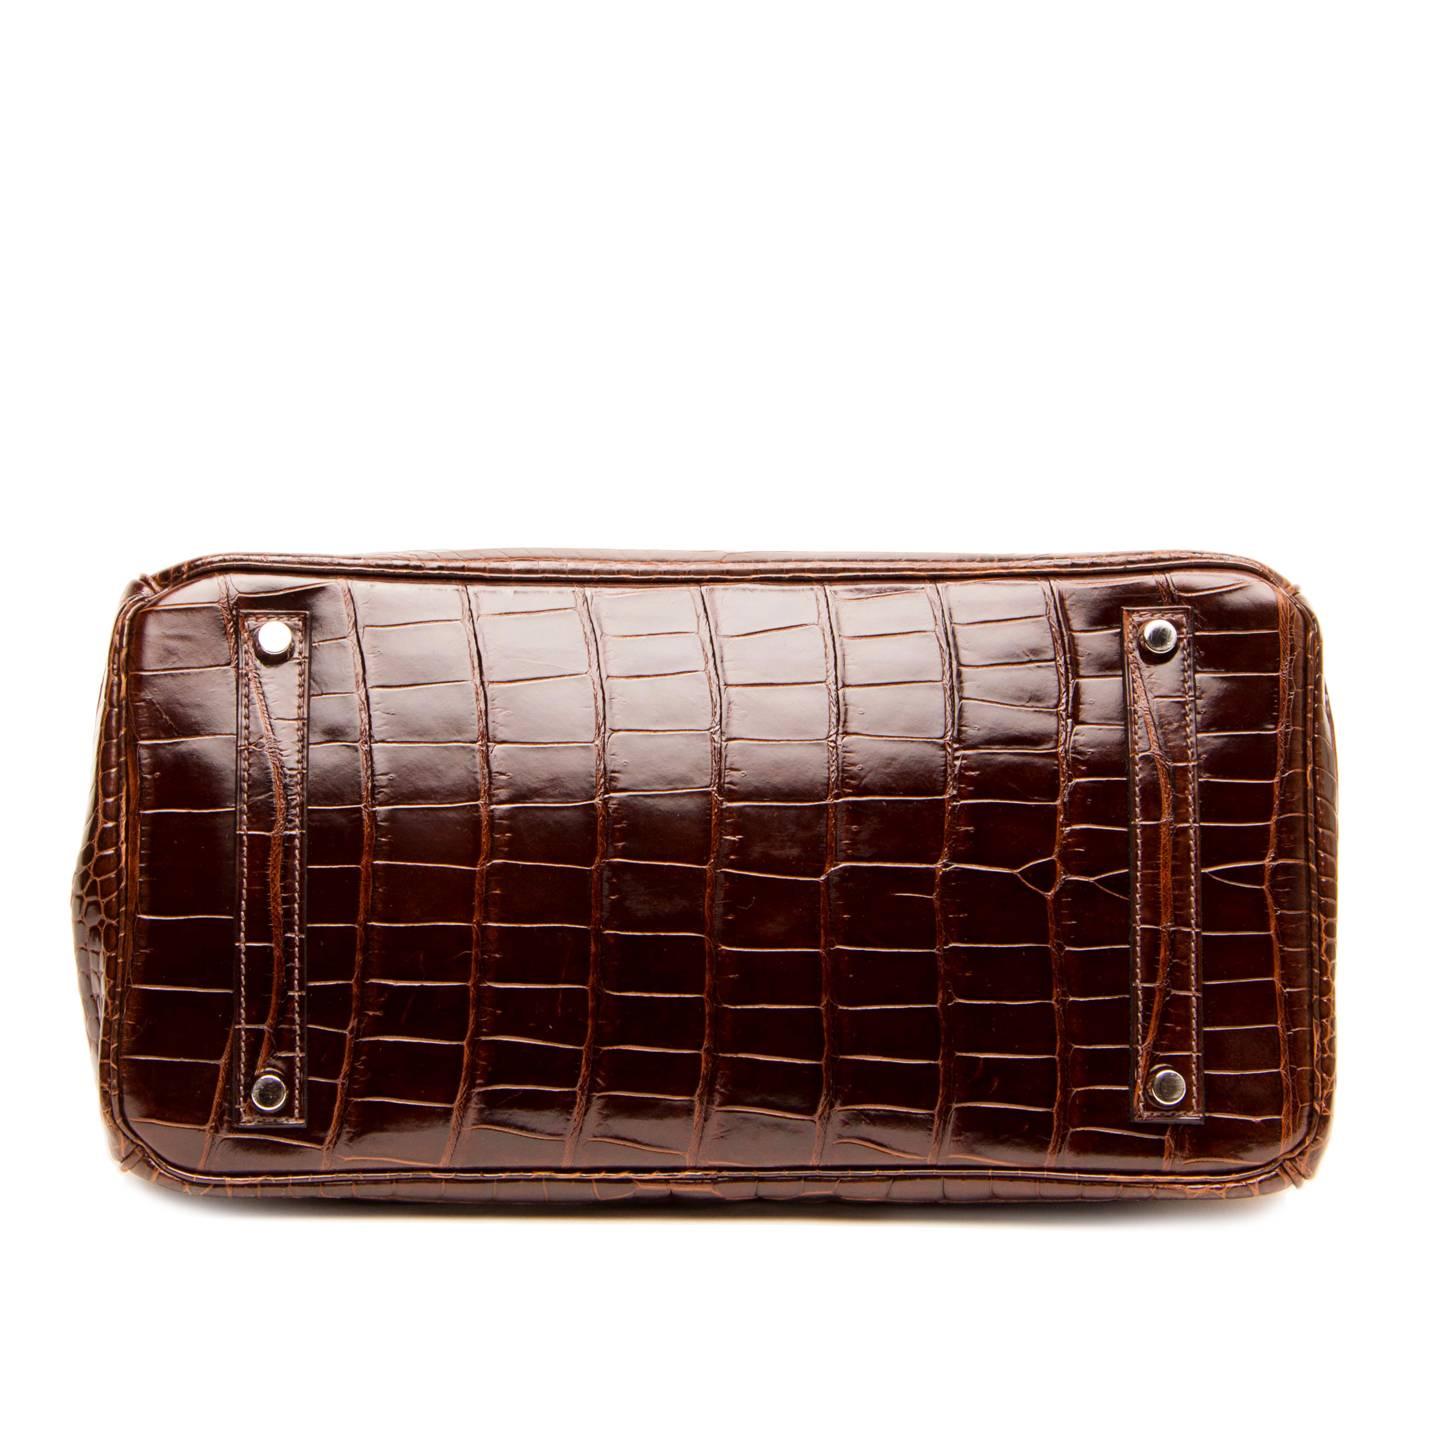 Black Hermès Birkin Chocolate Brown Porosus Crocodile Bag 35cm w/ Palladium Hardware For Sale